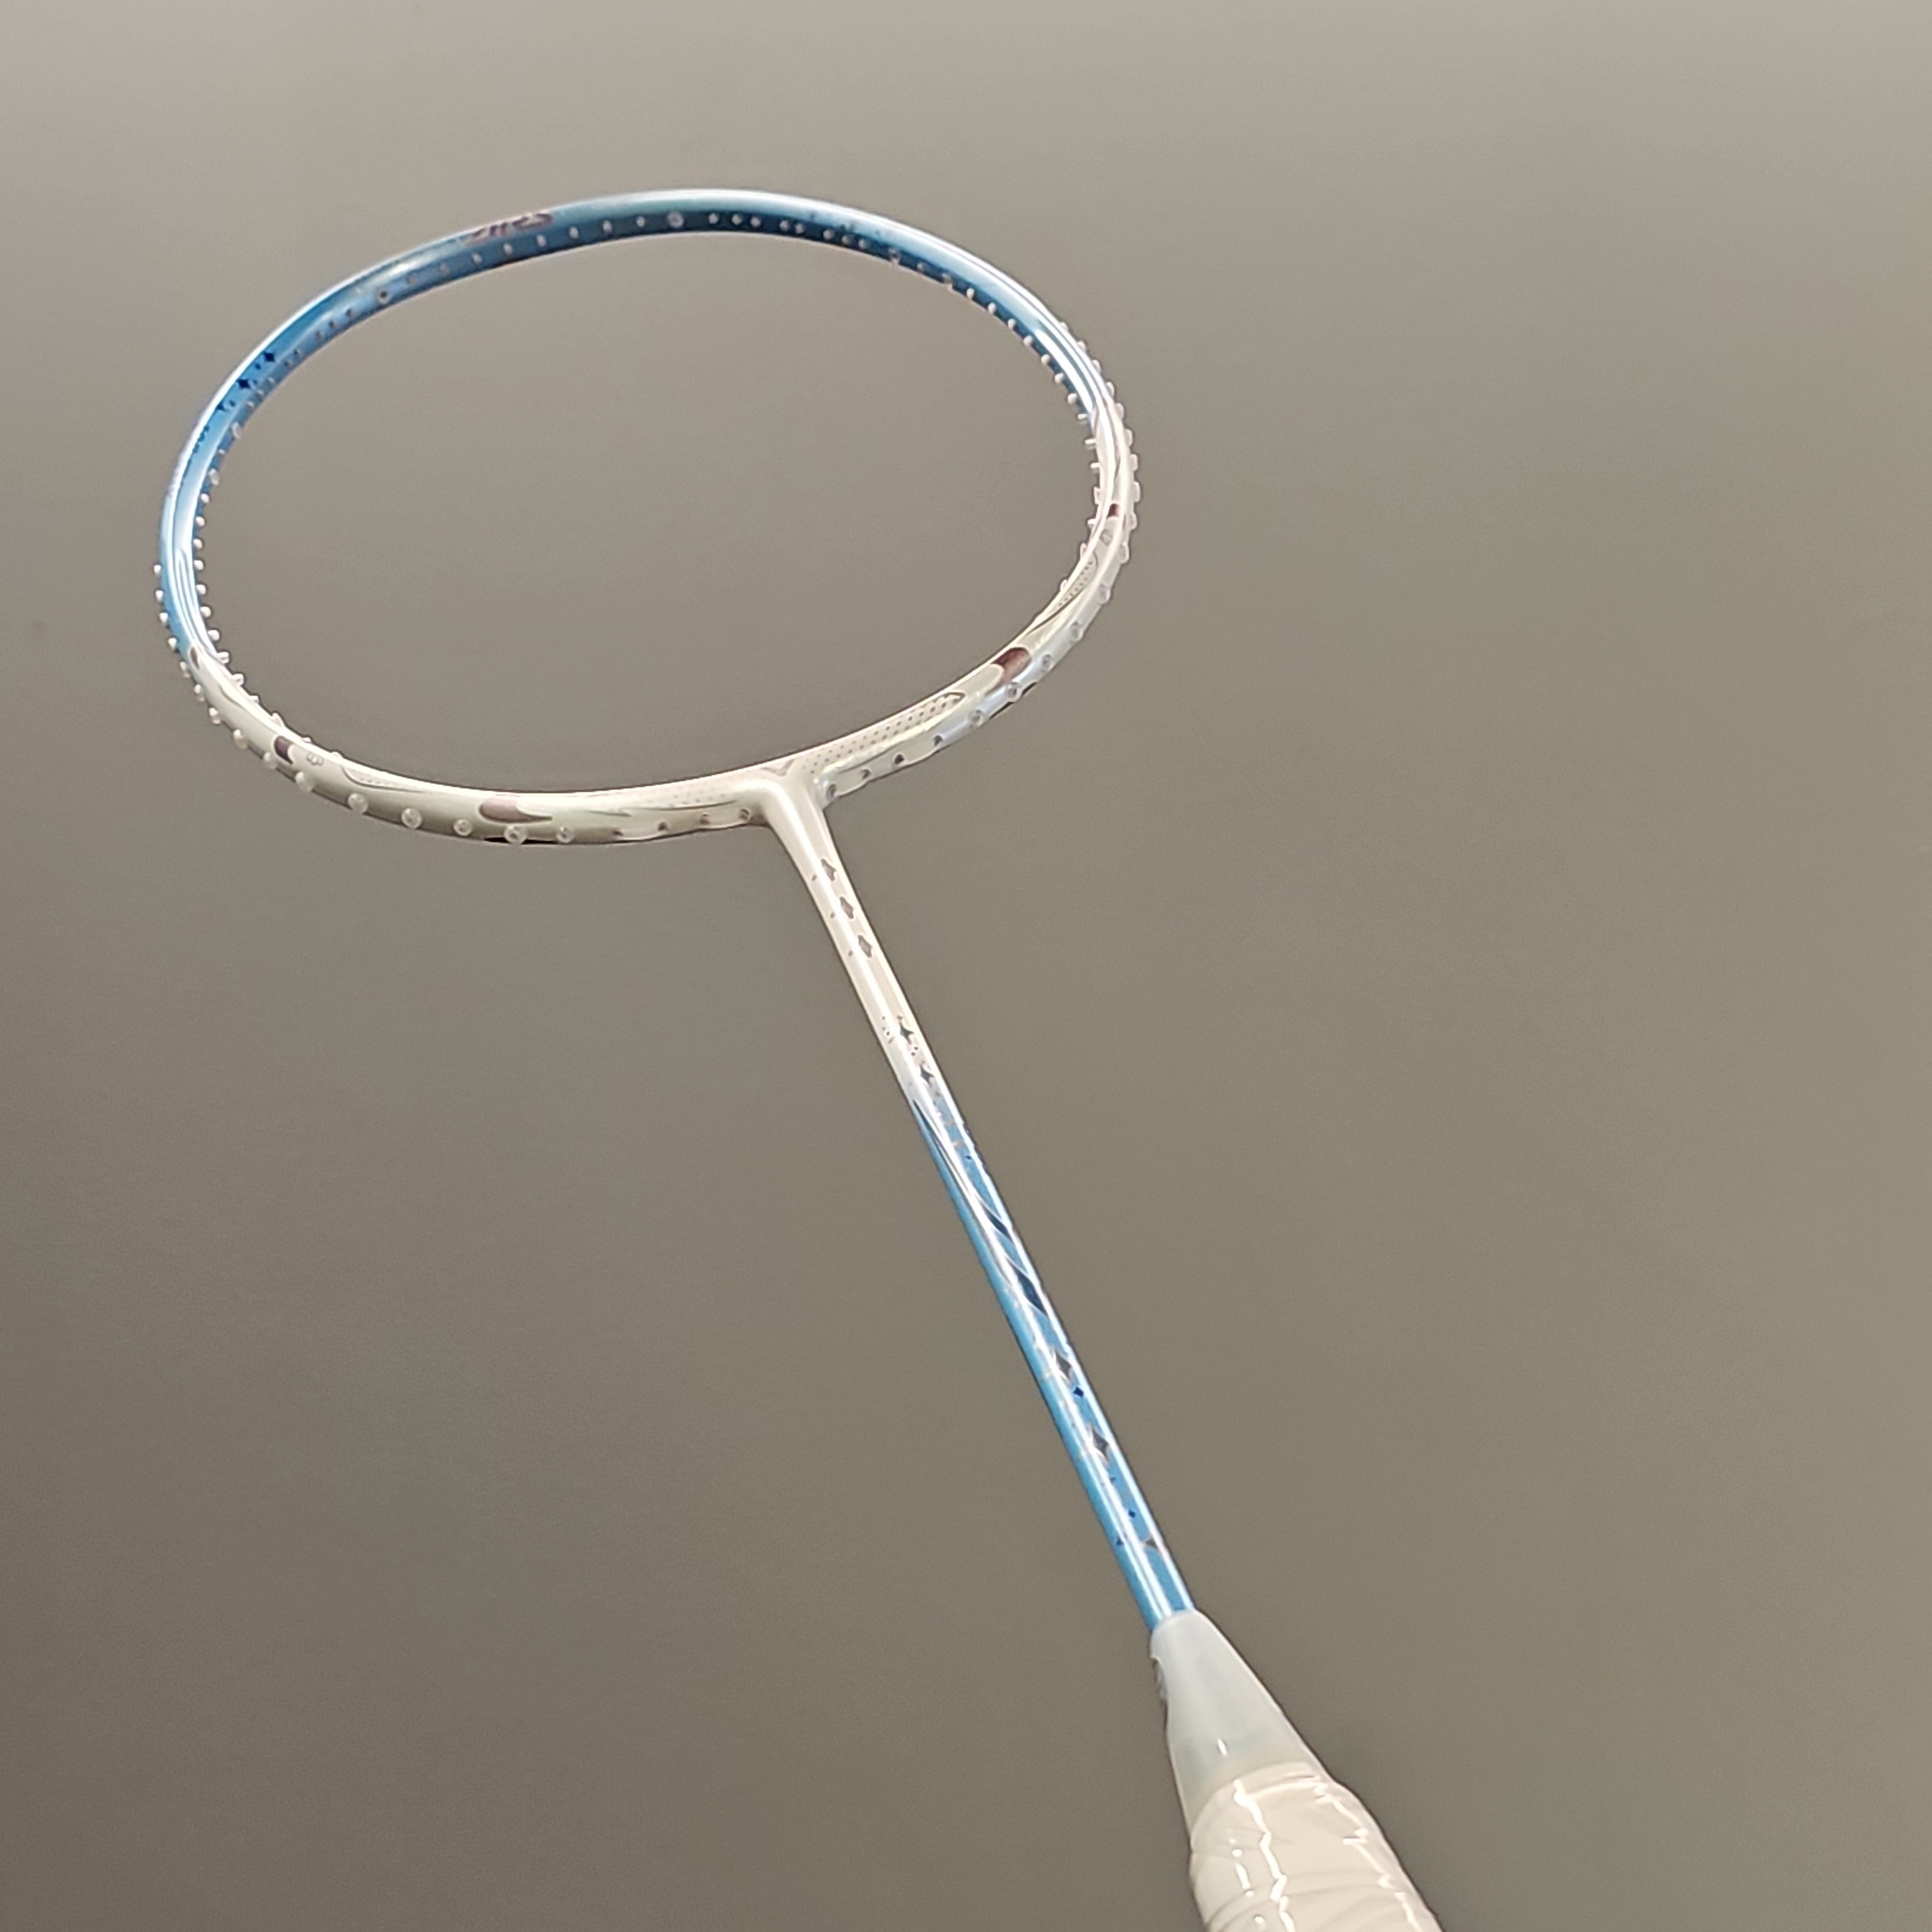 Victor AuraSpeed 90F Badminton Racket | badminton racket review